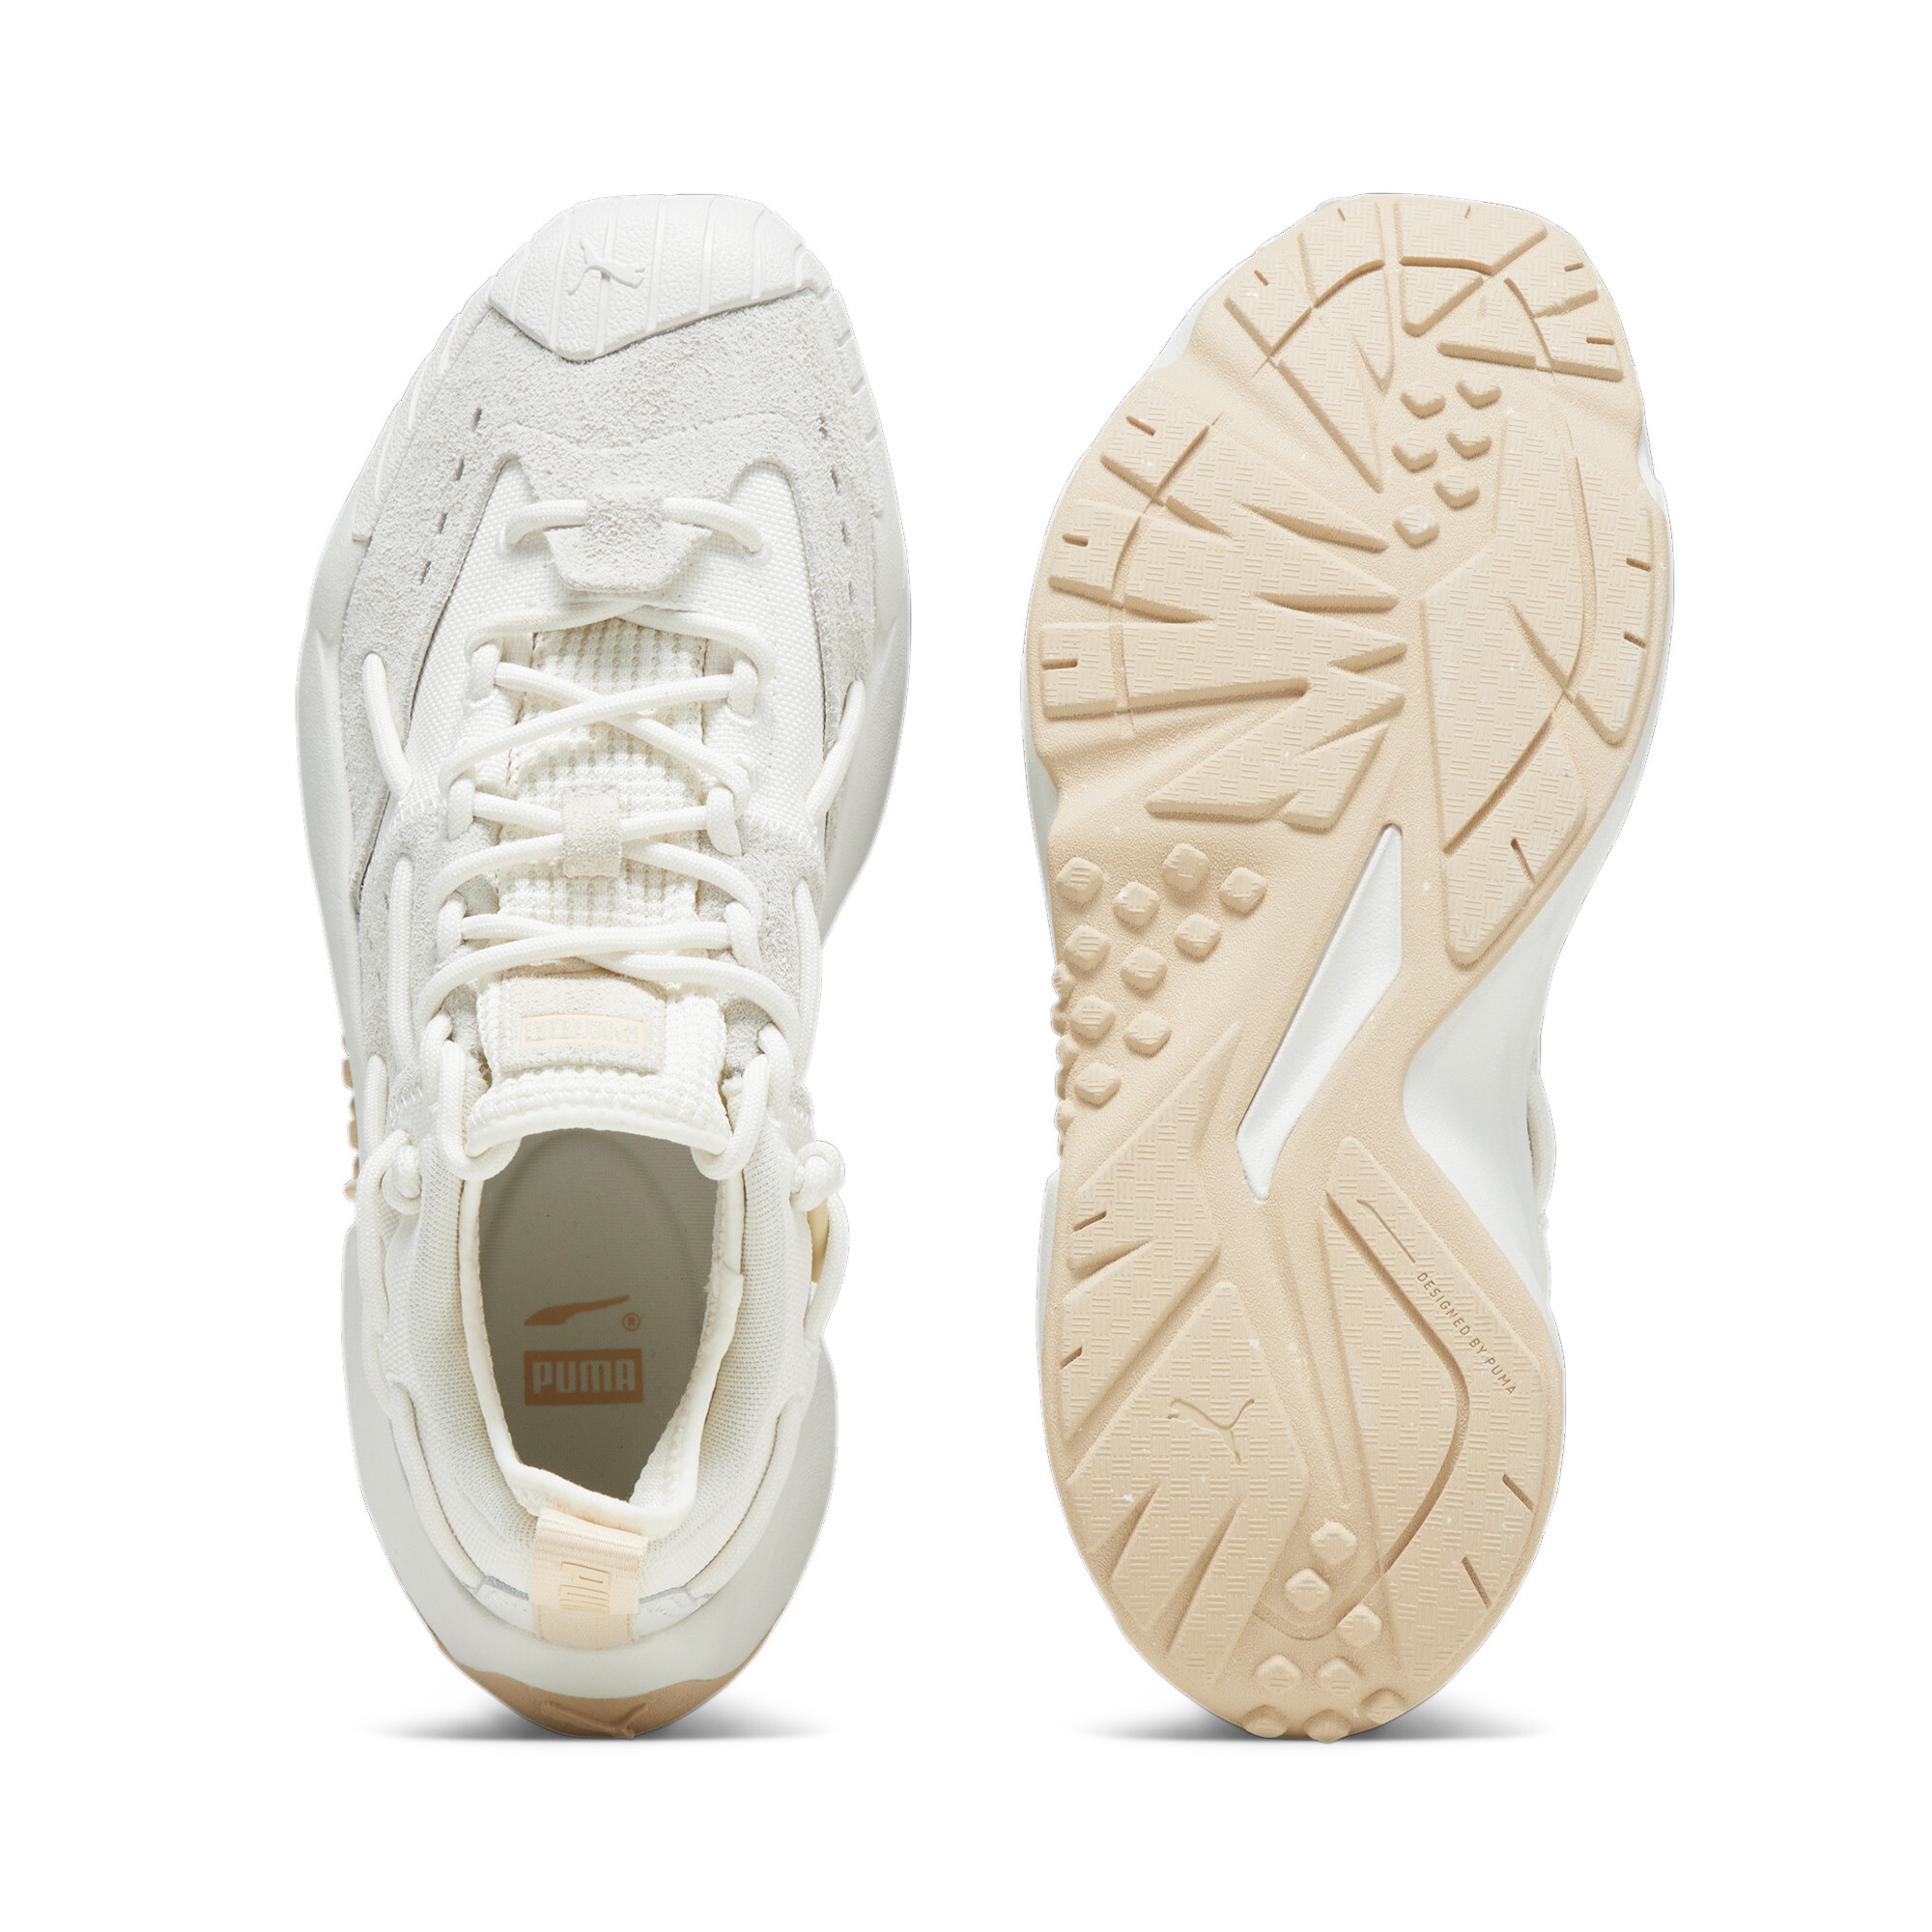 Men's PUMA Plexus Sand Sneakers In White, Size EU 37